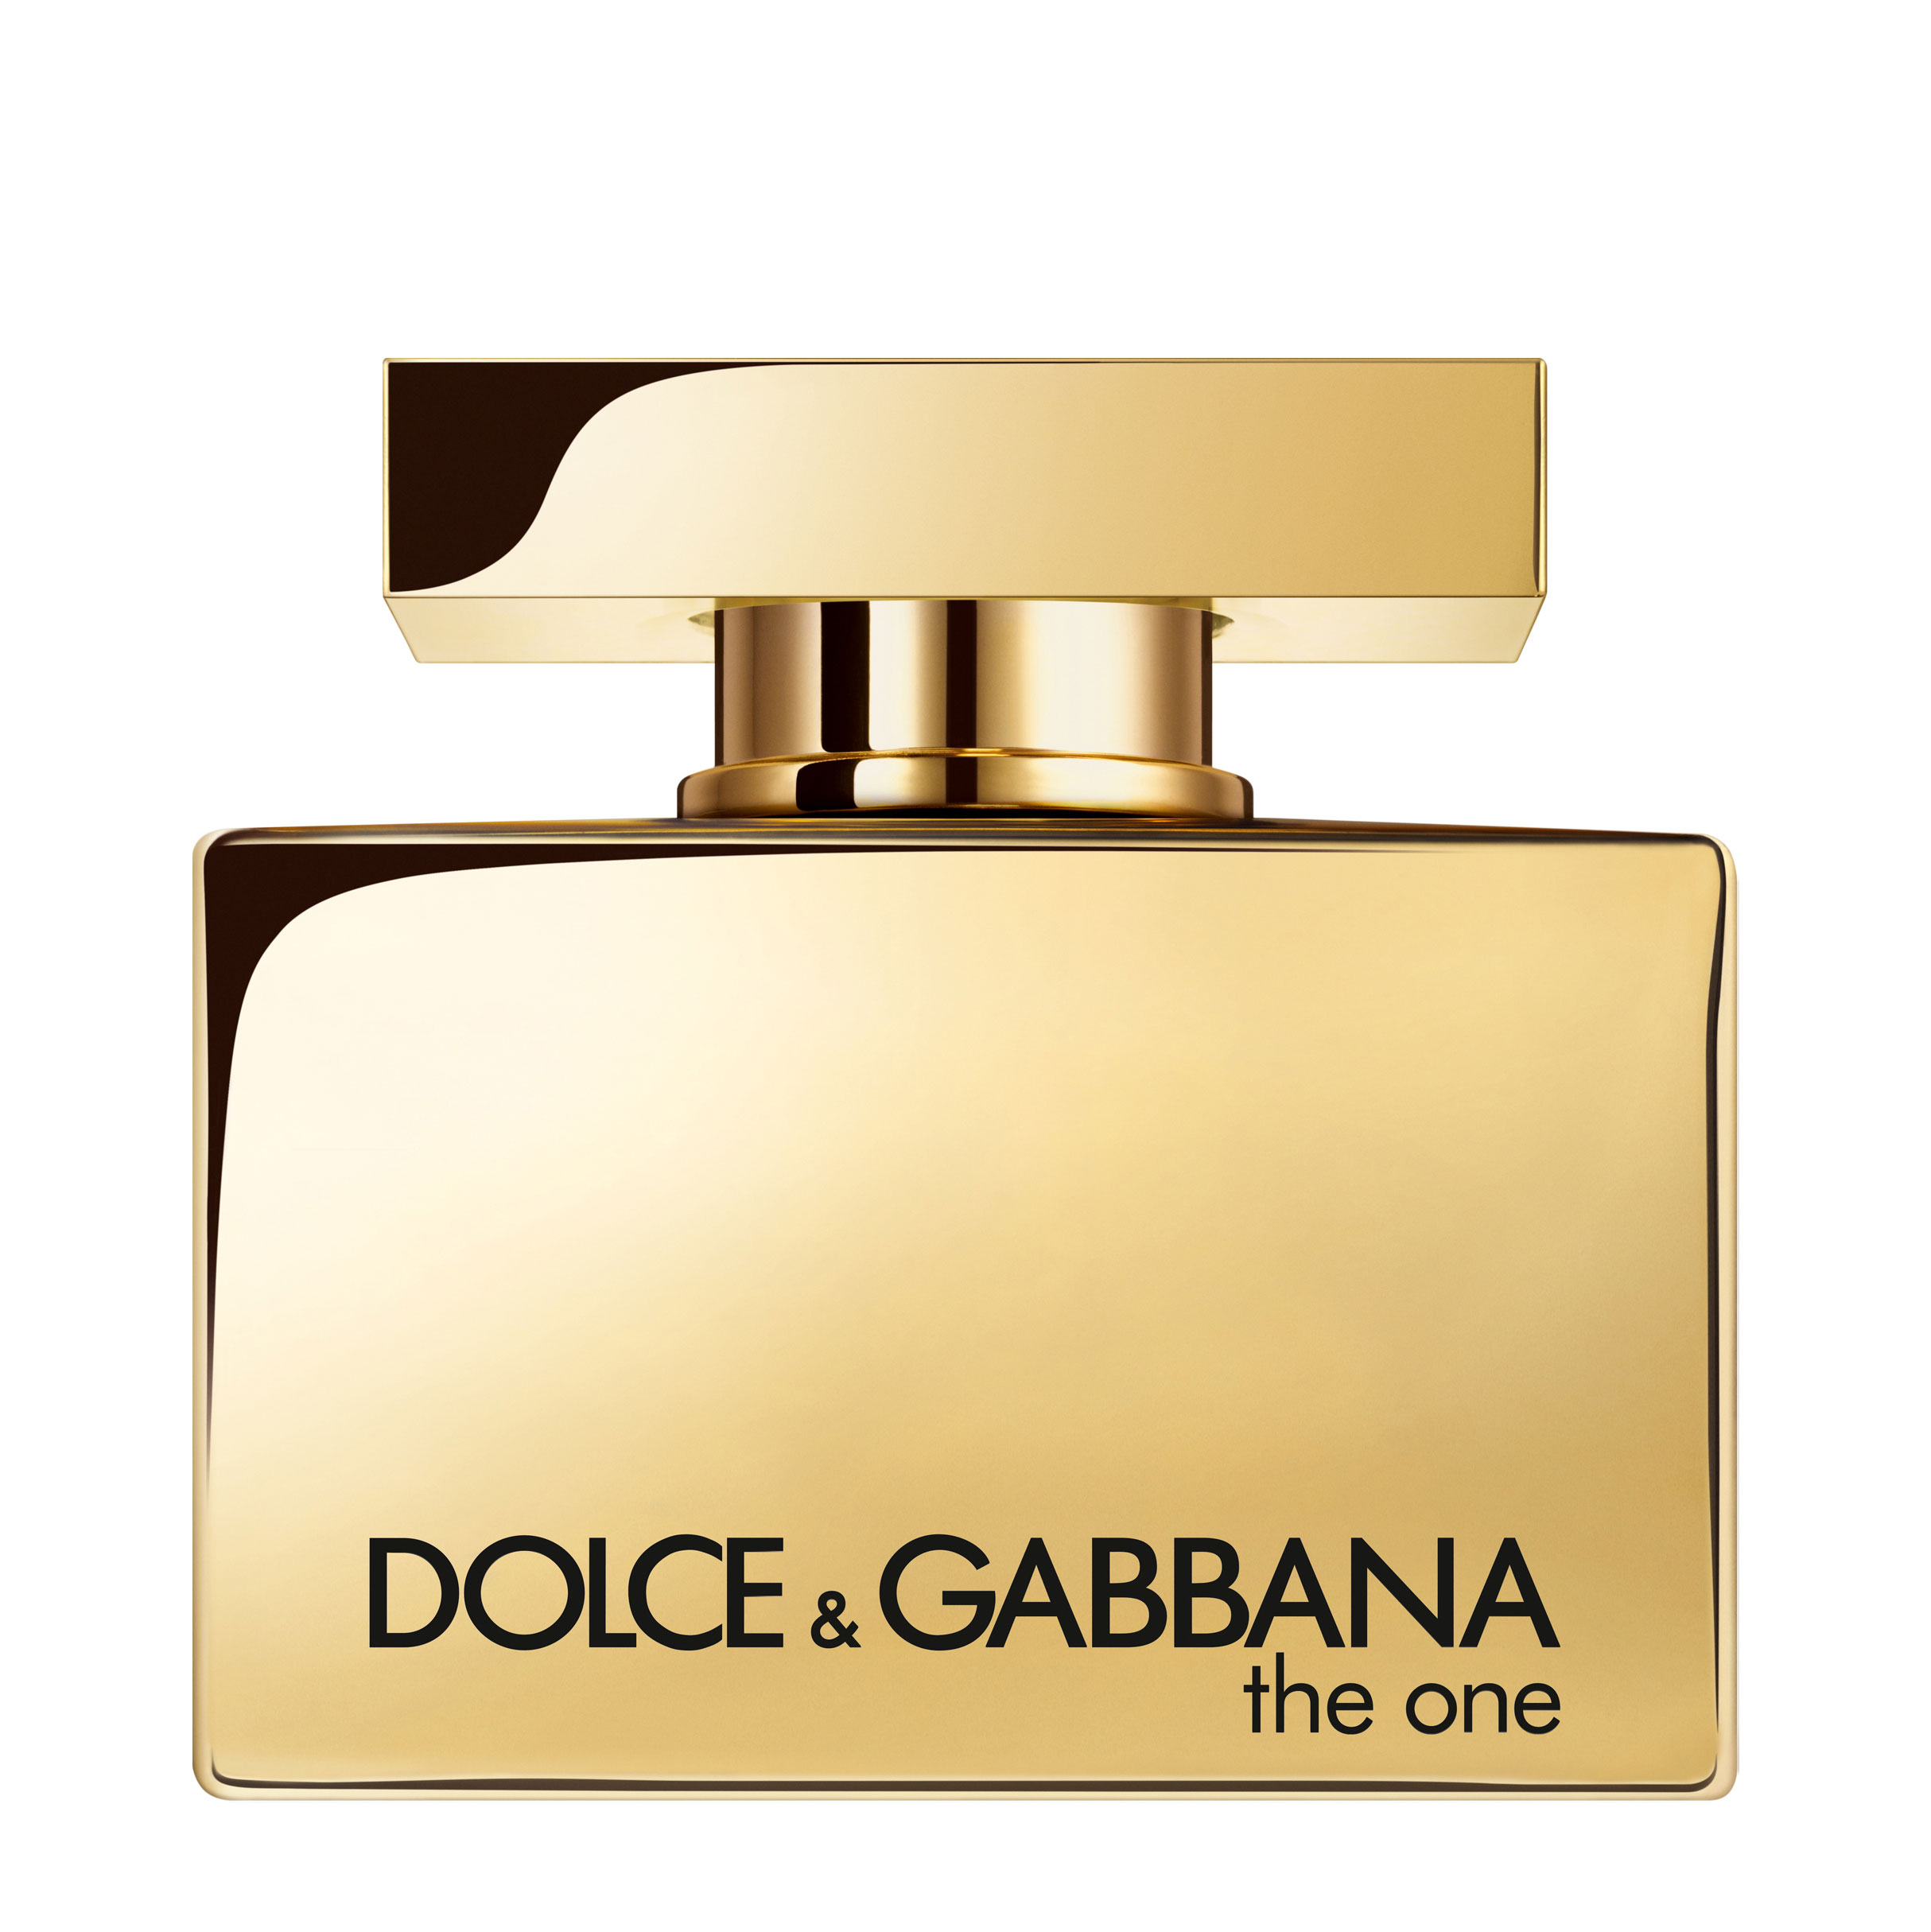 Дольче габбана intense. Dolce & Gabbana the one women EDP, 75 ml. Dolce Gabbana the one Gold intense 30 ml. Dolce Gabbana the one Gold intense. Духи Gold Dolce Gabbana the one.